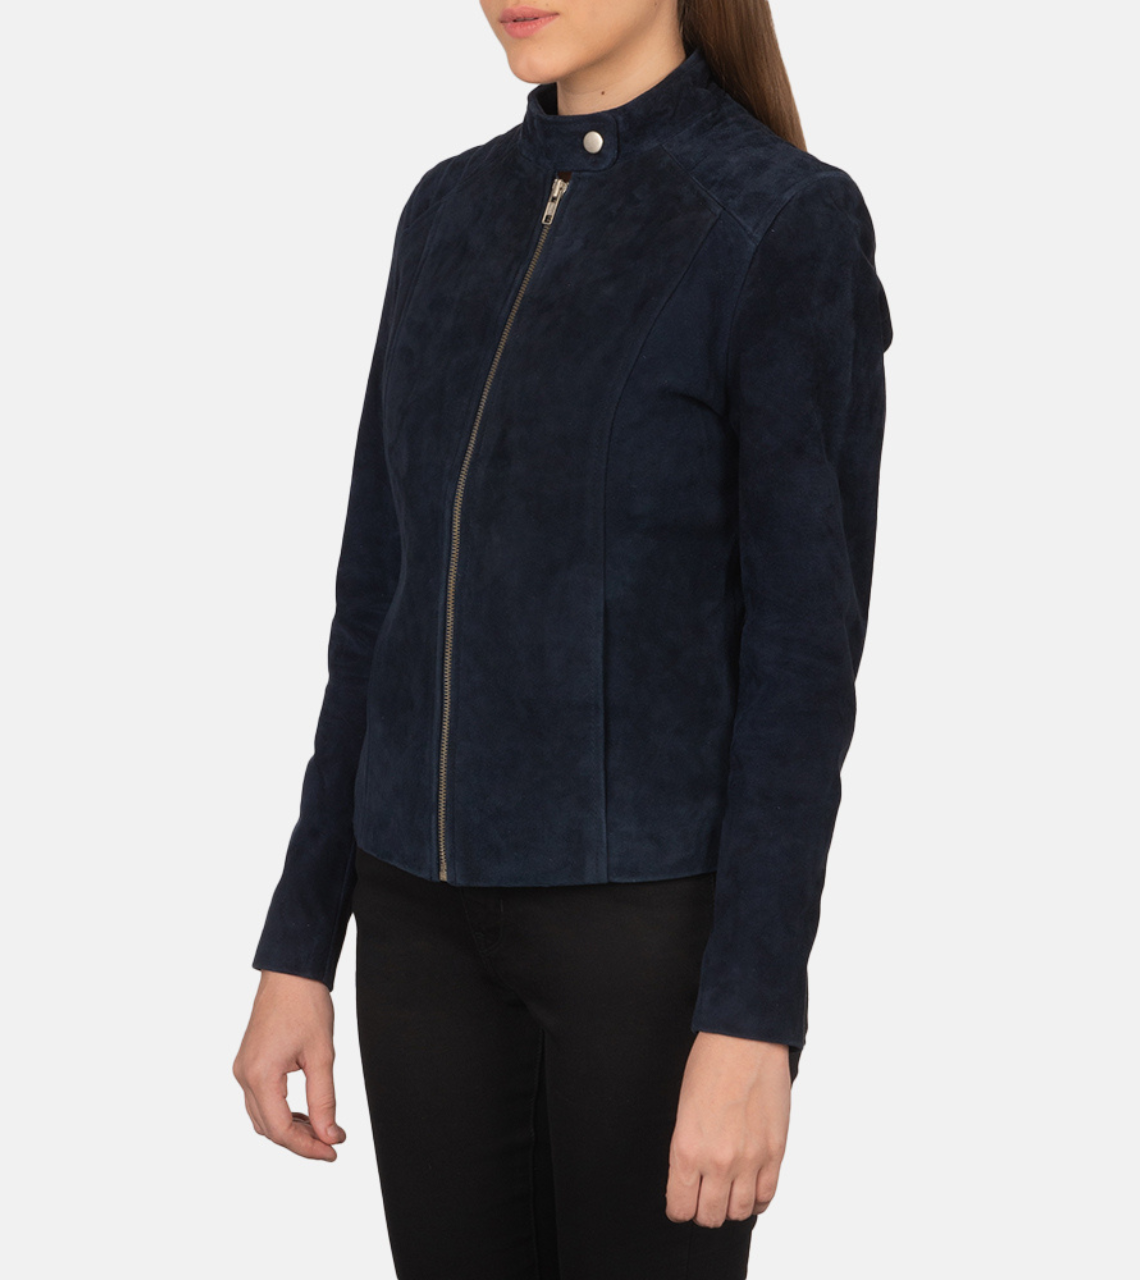 Vixra Women's Blue Suede Leather Jacket